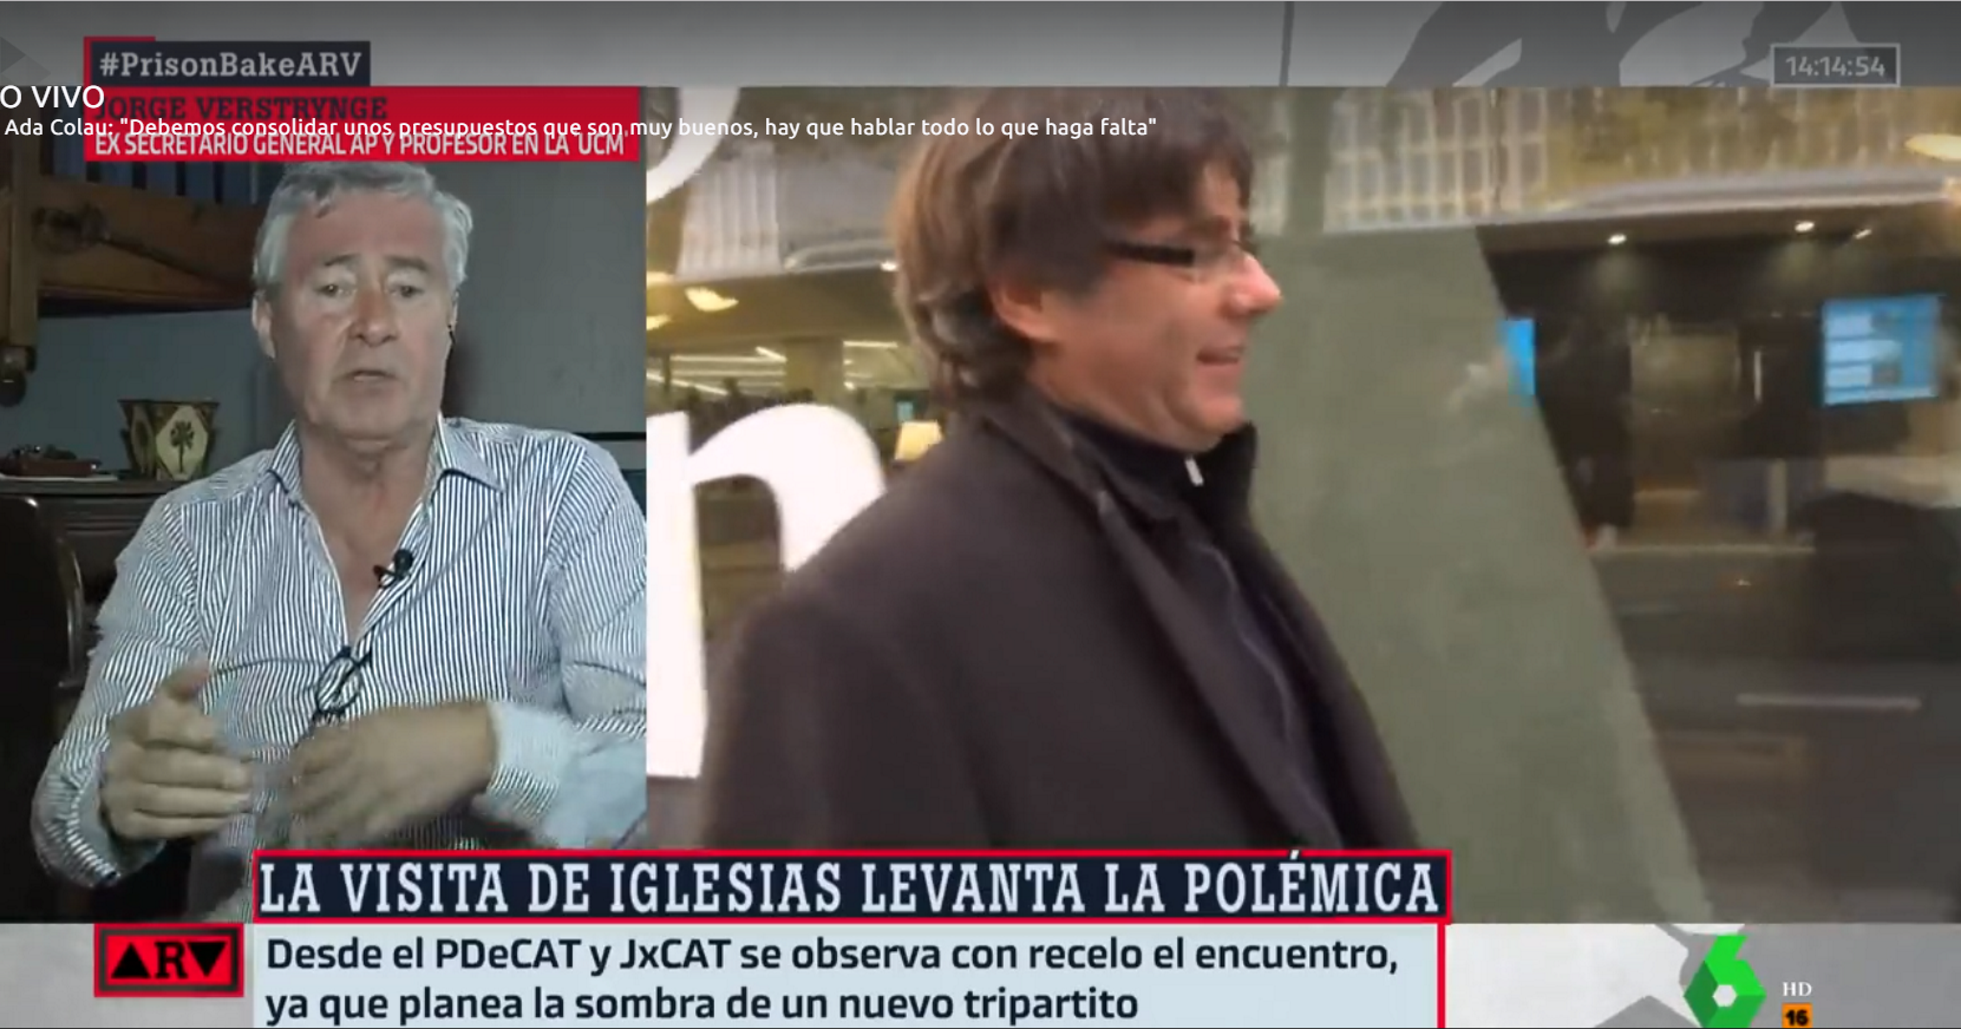 Verstrynge denuncia maniobres del "poder de Madrid" per posar Junqueras contra Puigdemont